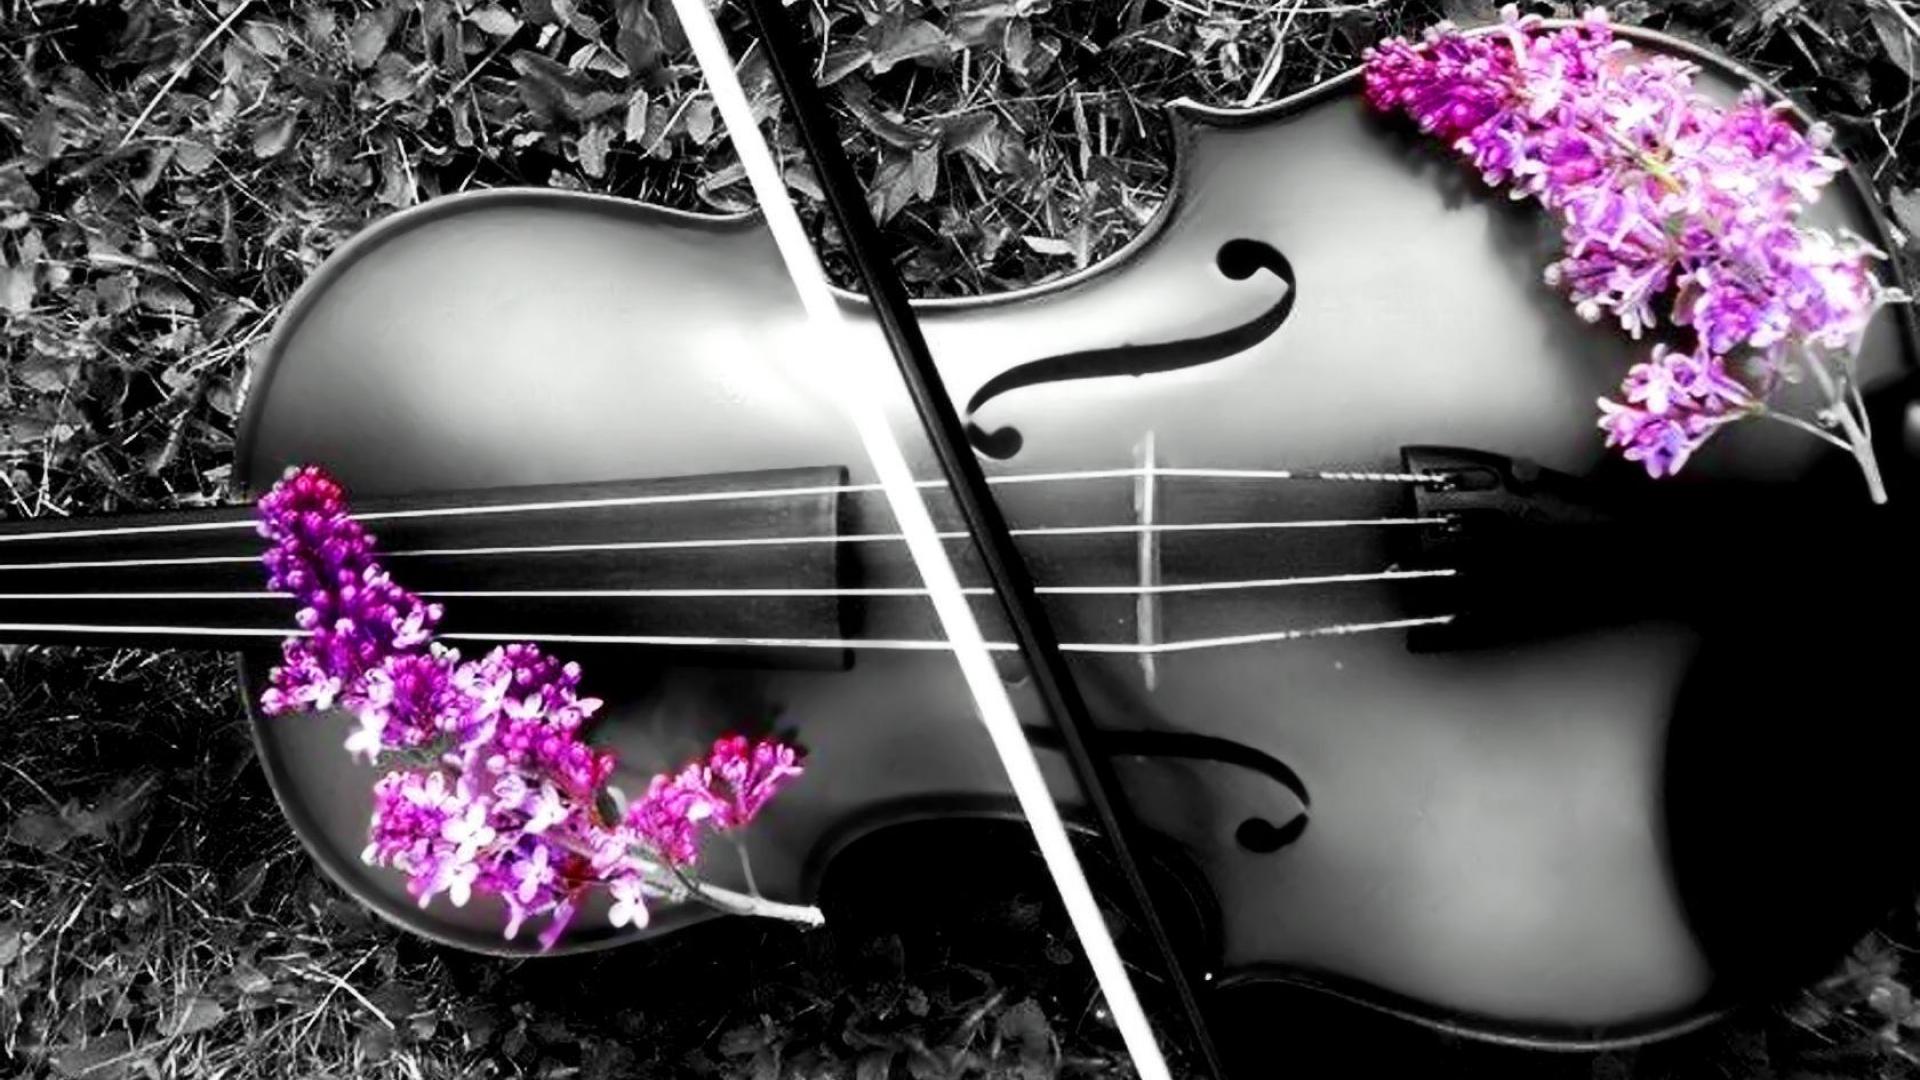 Violin 1080p - Wallpaper, High Definition, High Quality, Widescreen